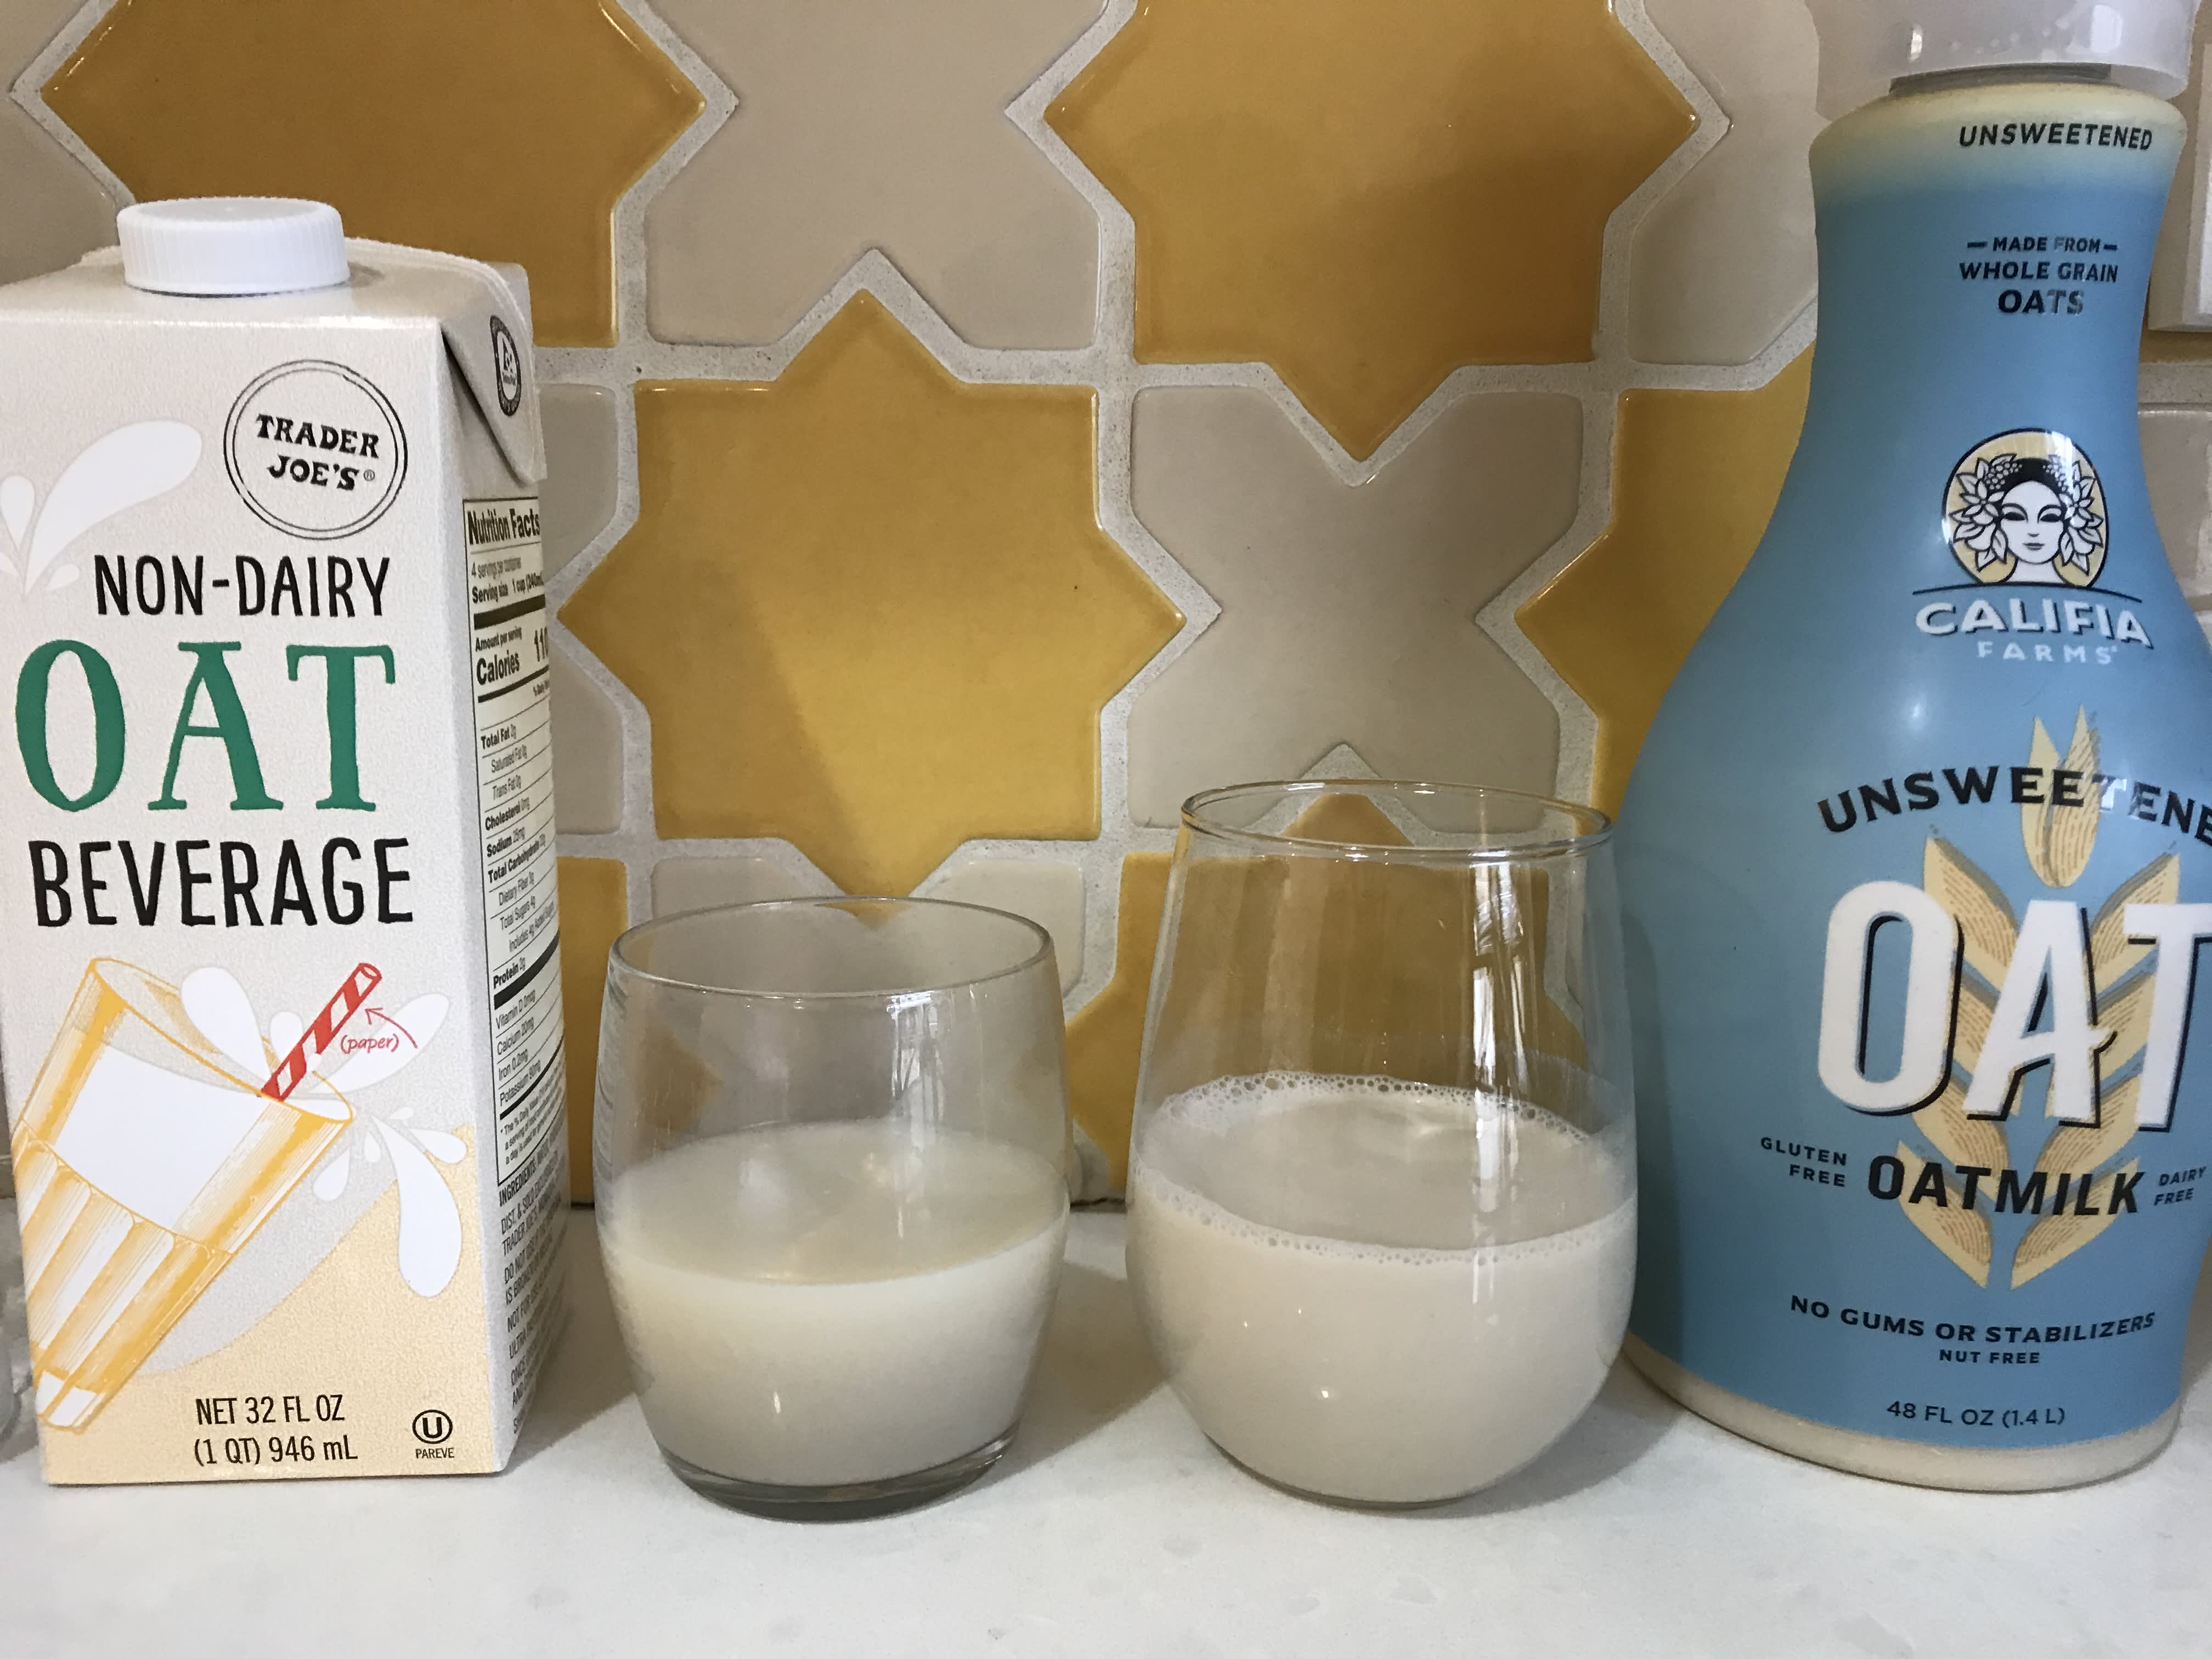 Is Oat Beverage The Same As Oat Milk? 